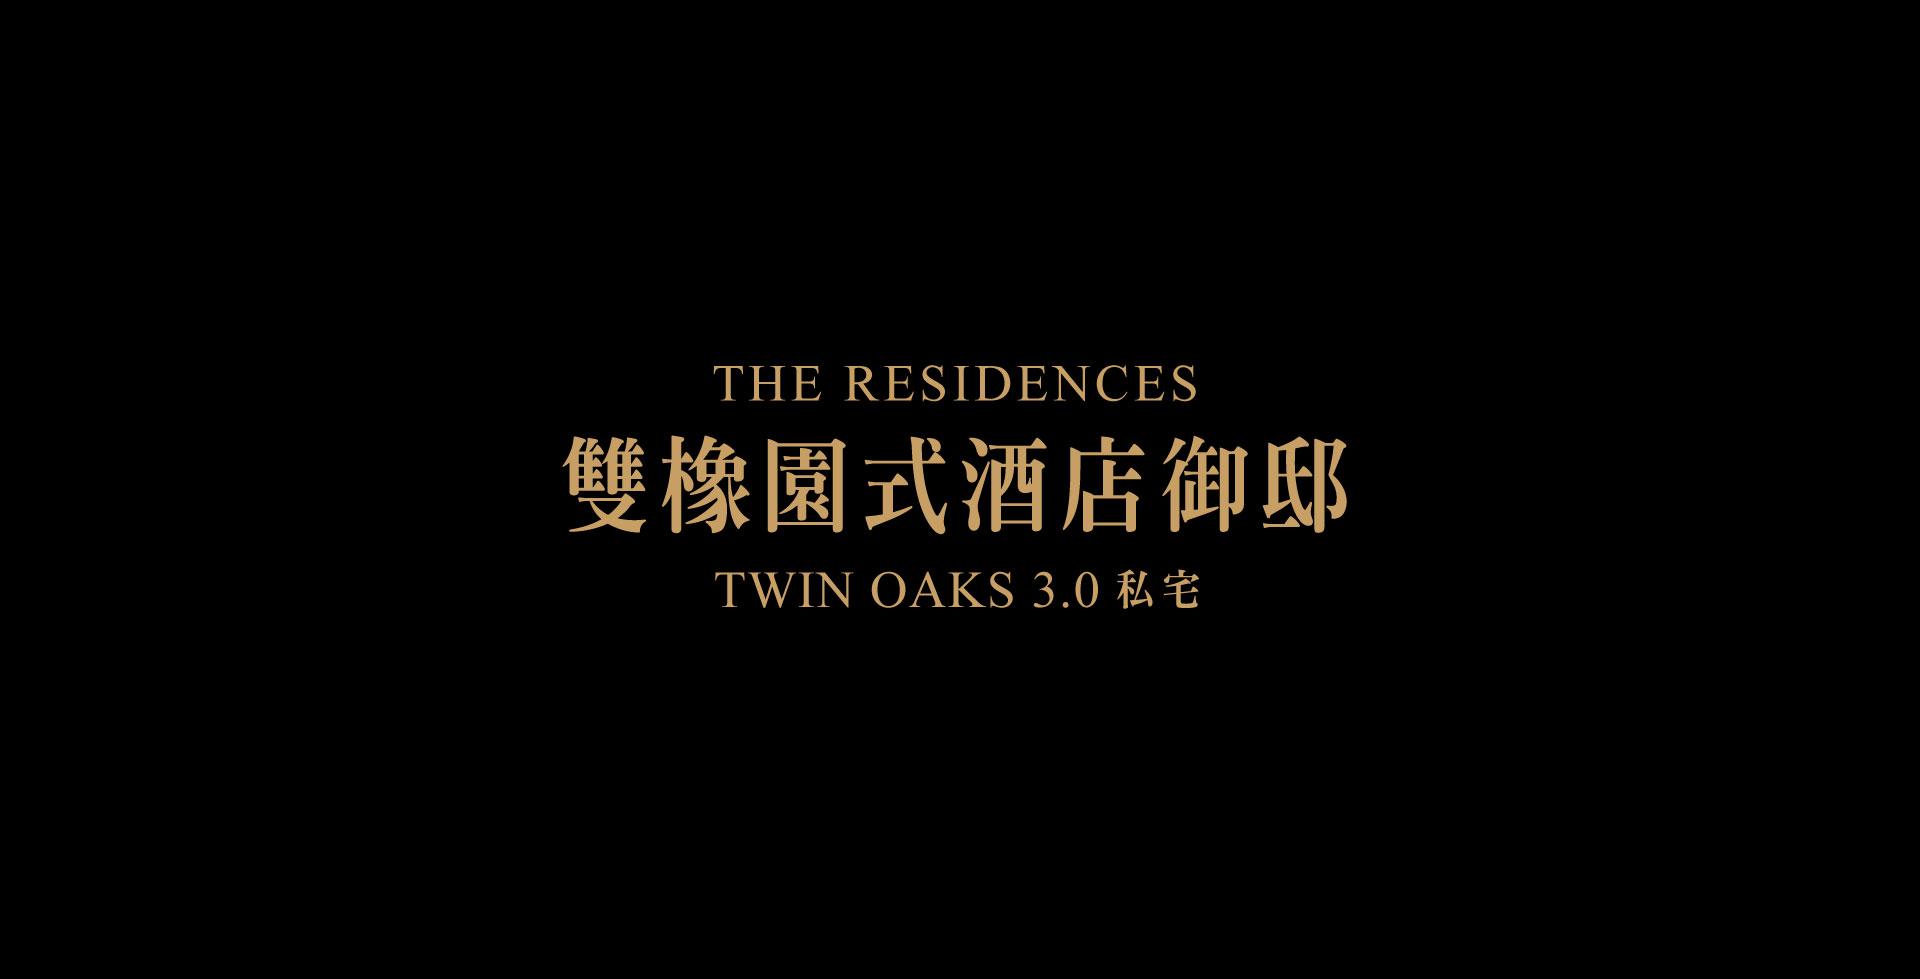 The Residences Twin Oaks 3.0